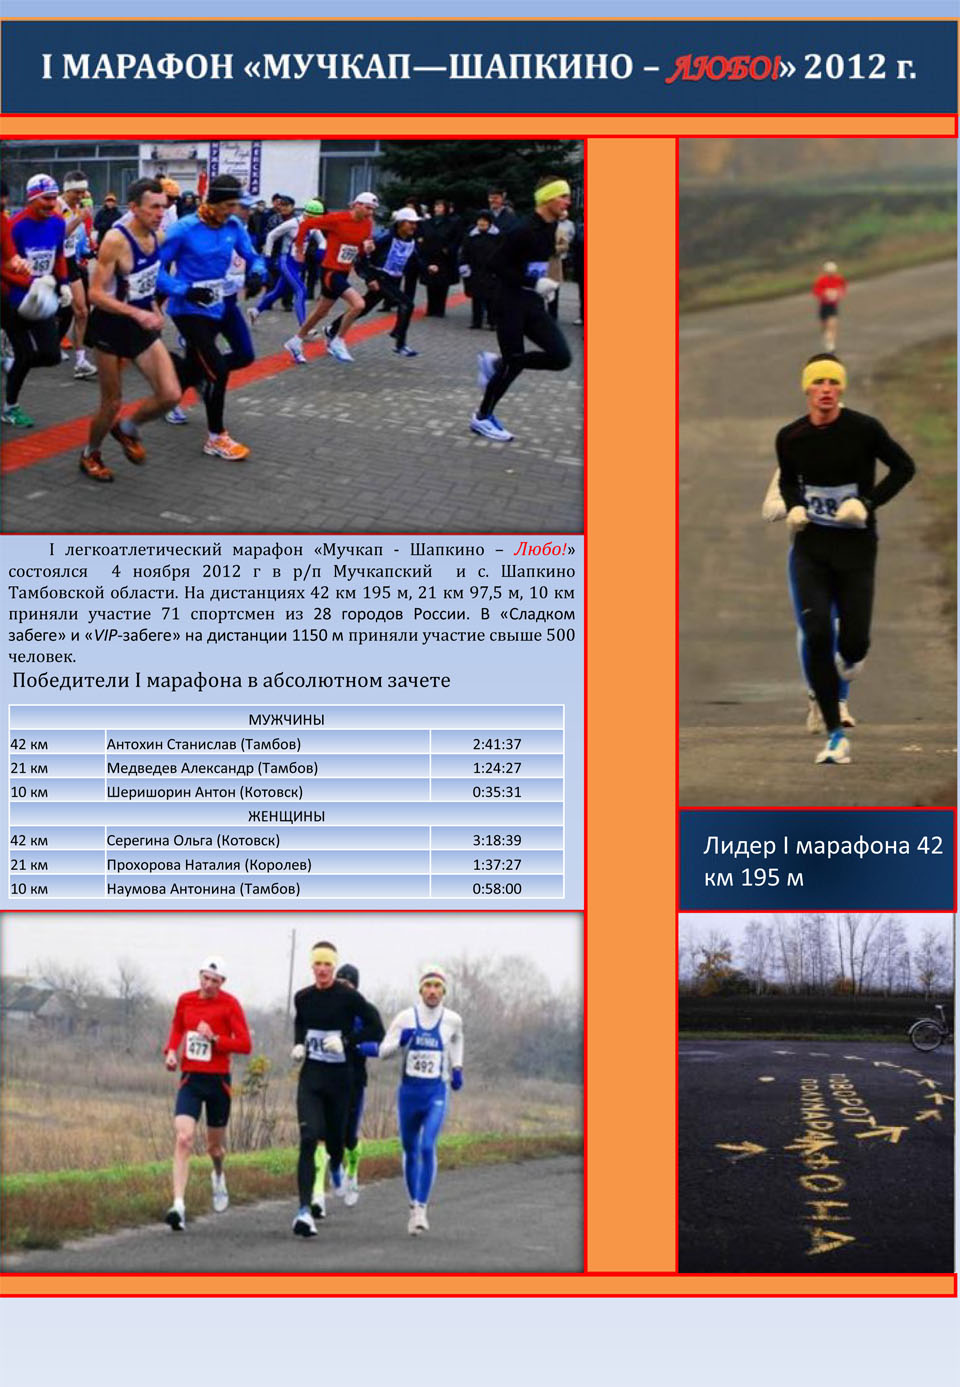 I-marathon-Muchkap-Shapkino-Lubo-2012